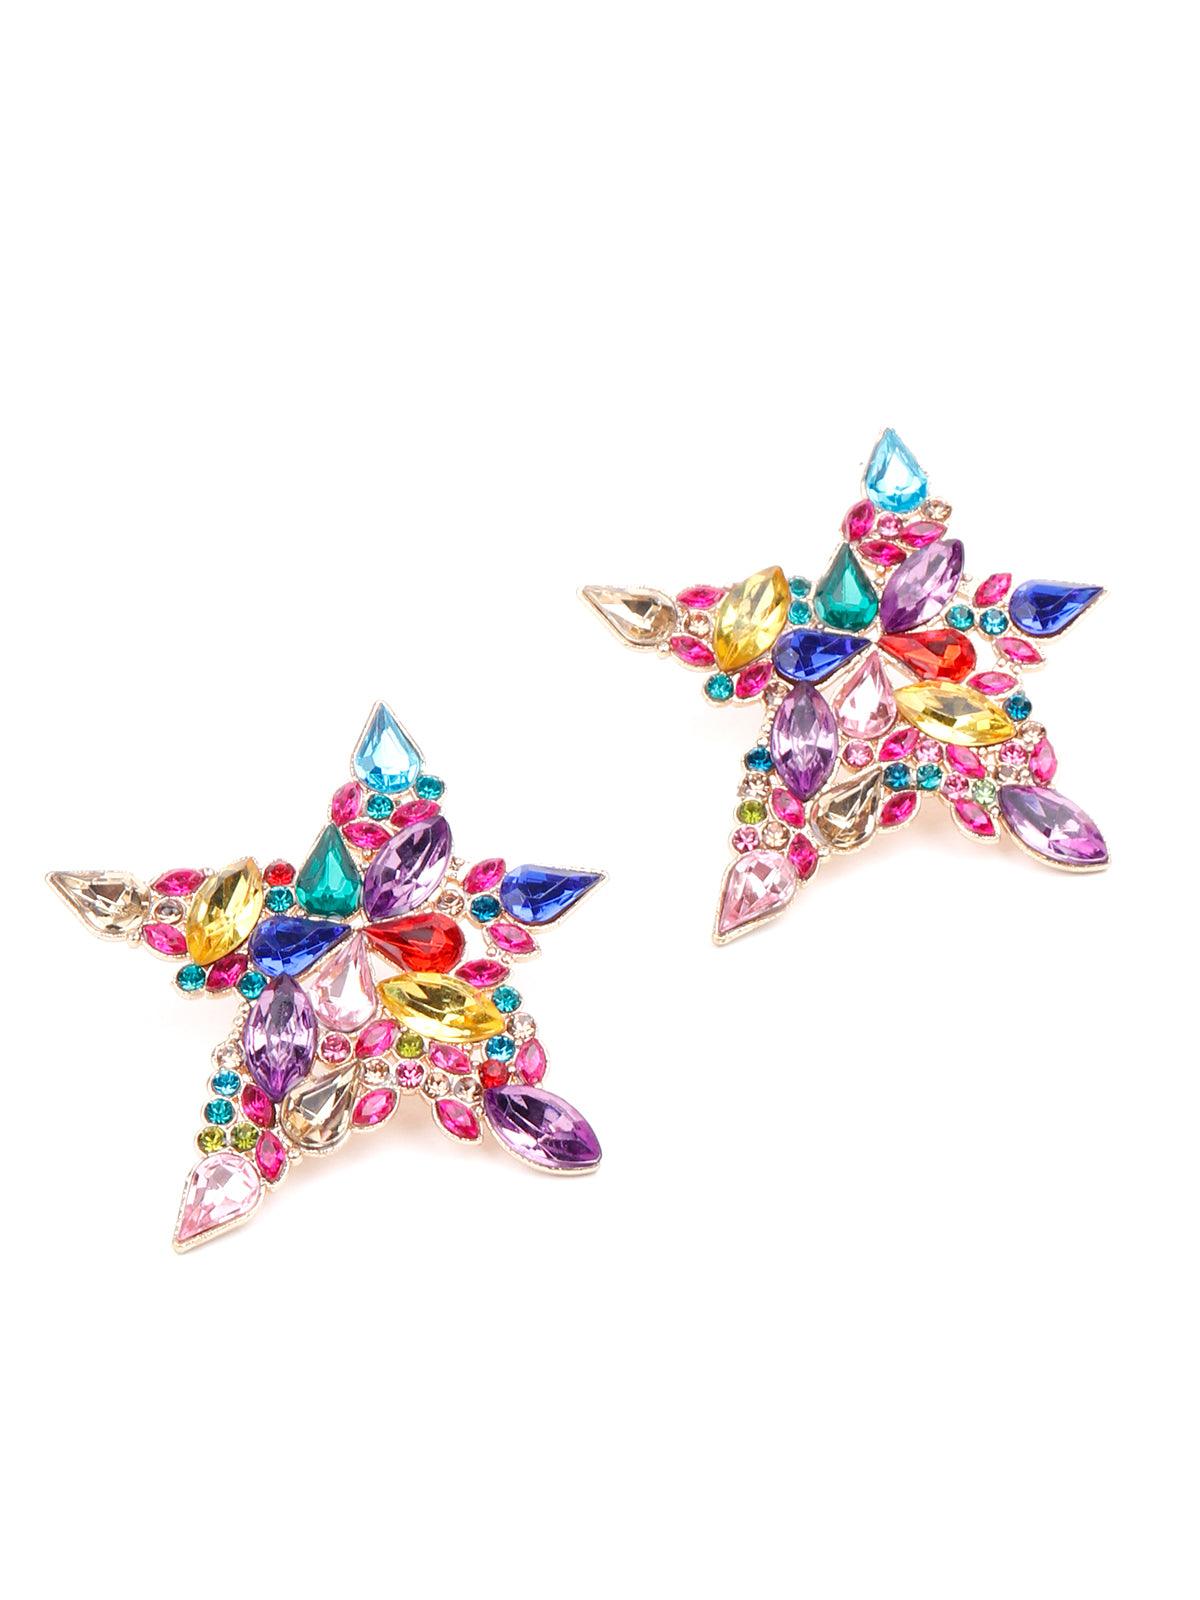 Multicoloured gemstone embellished star shaped earrings - Odette